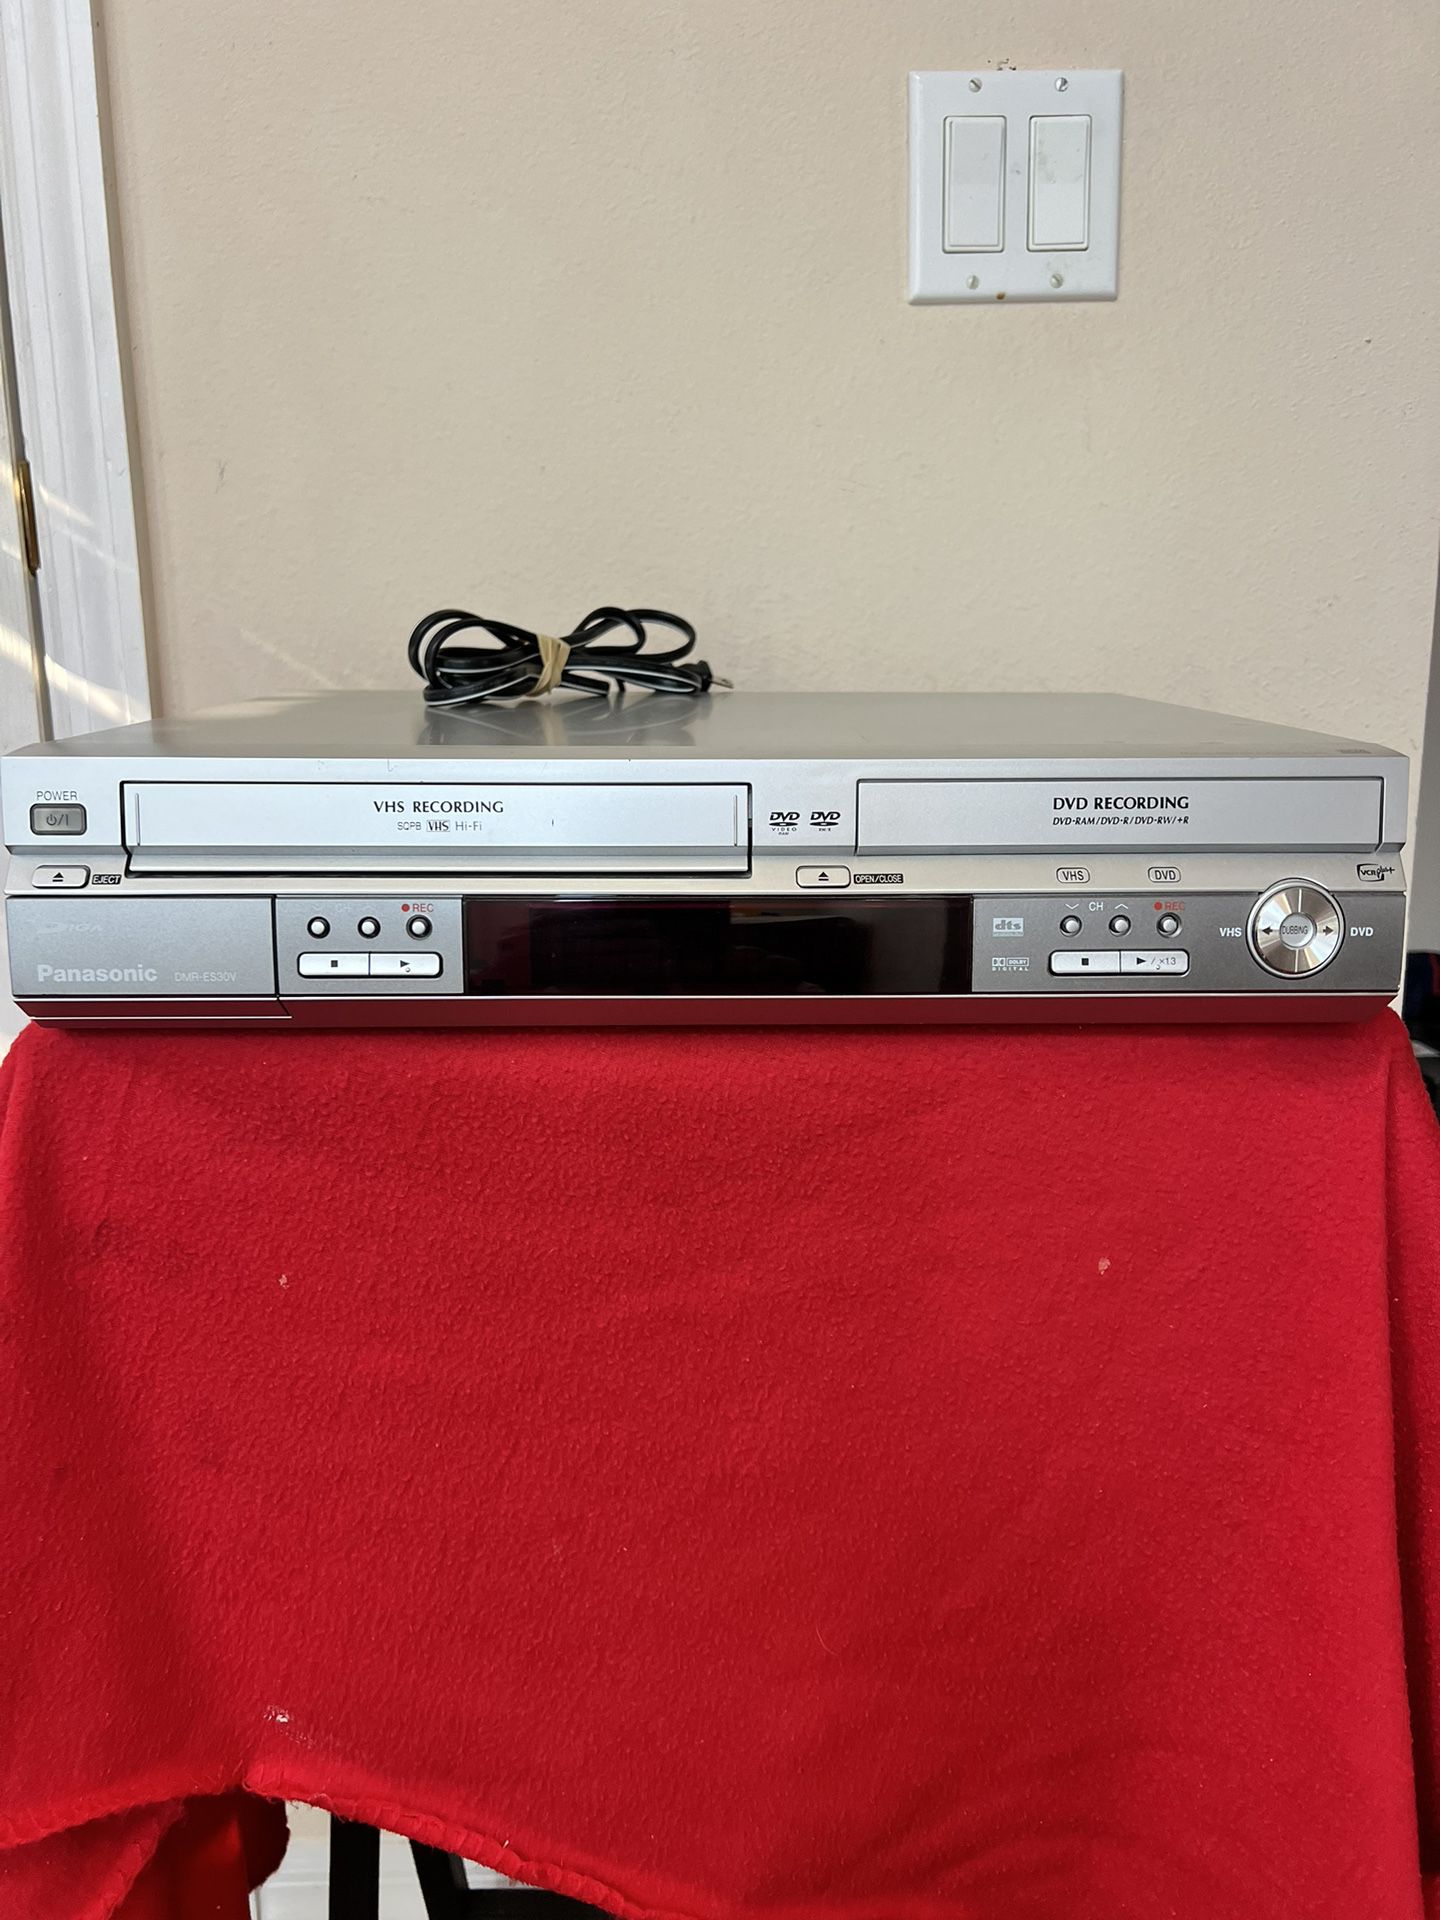 VCR-DVD Recorder Panasonic 